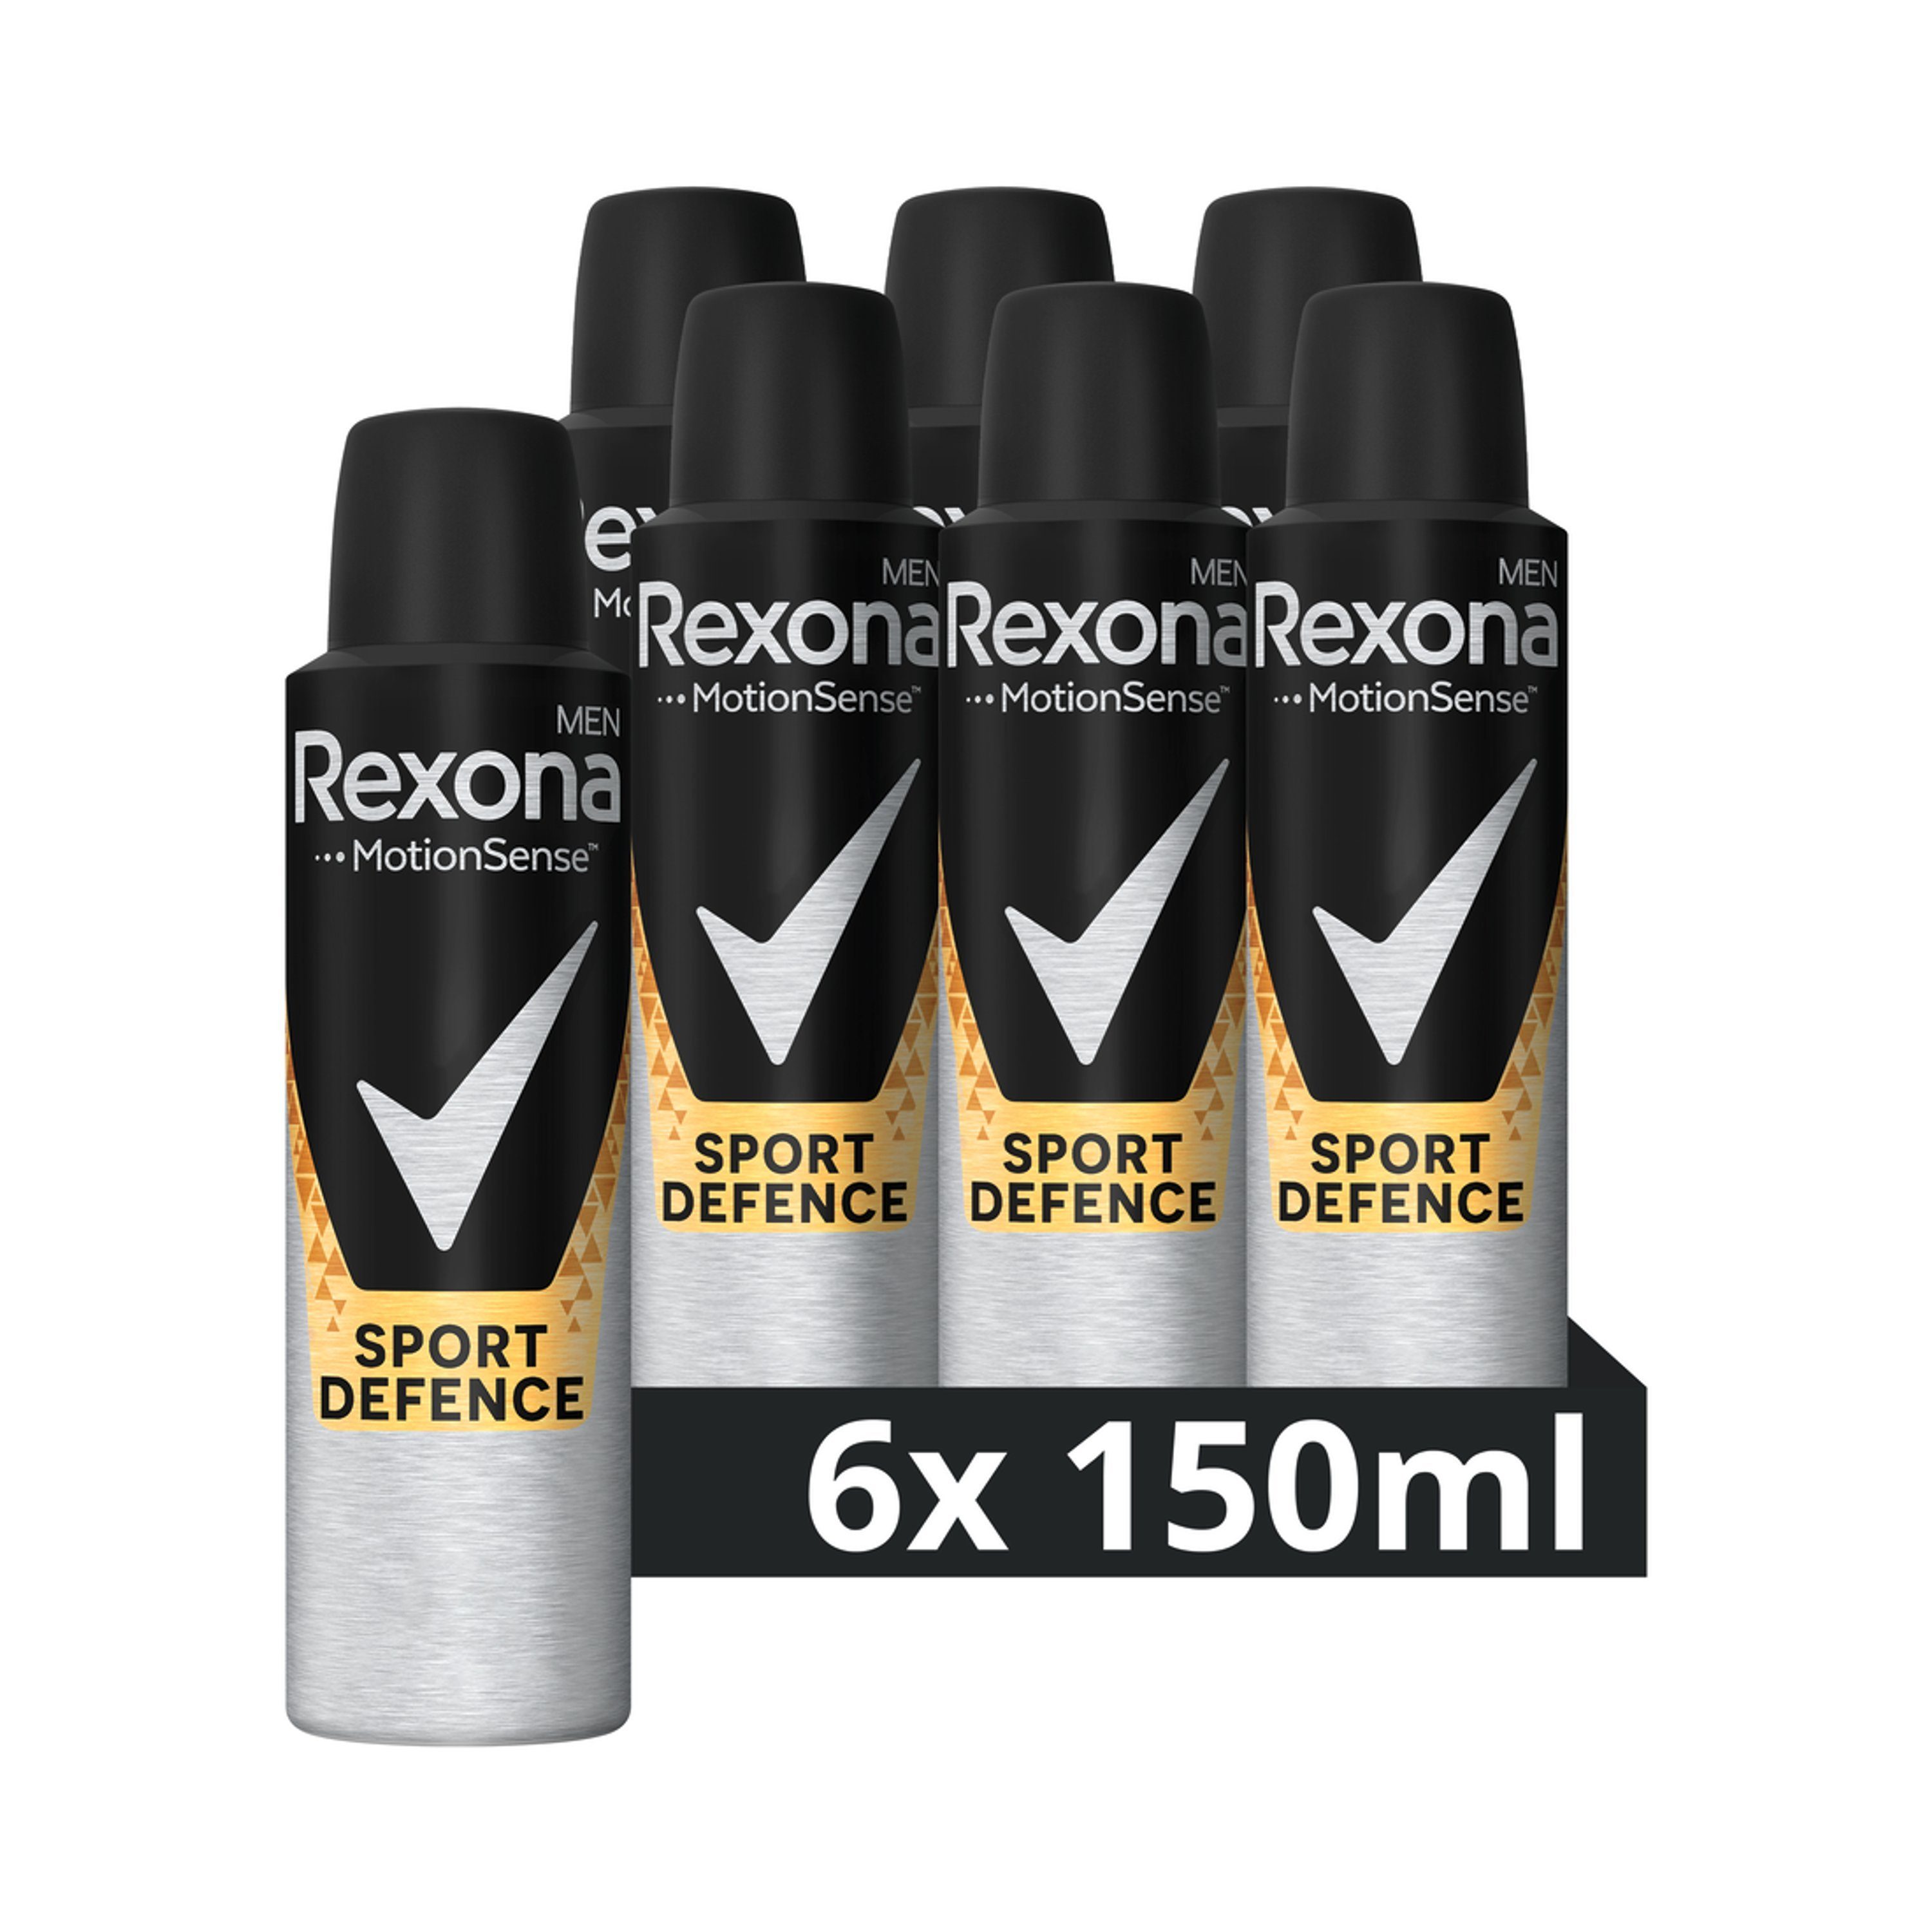 Rexona Deo-Set Rexona Men MotionSense Deo Spray 6x 150ml Deodorant Männerdeo | Deos